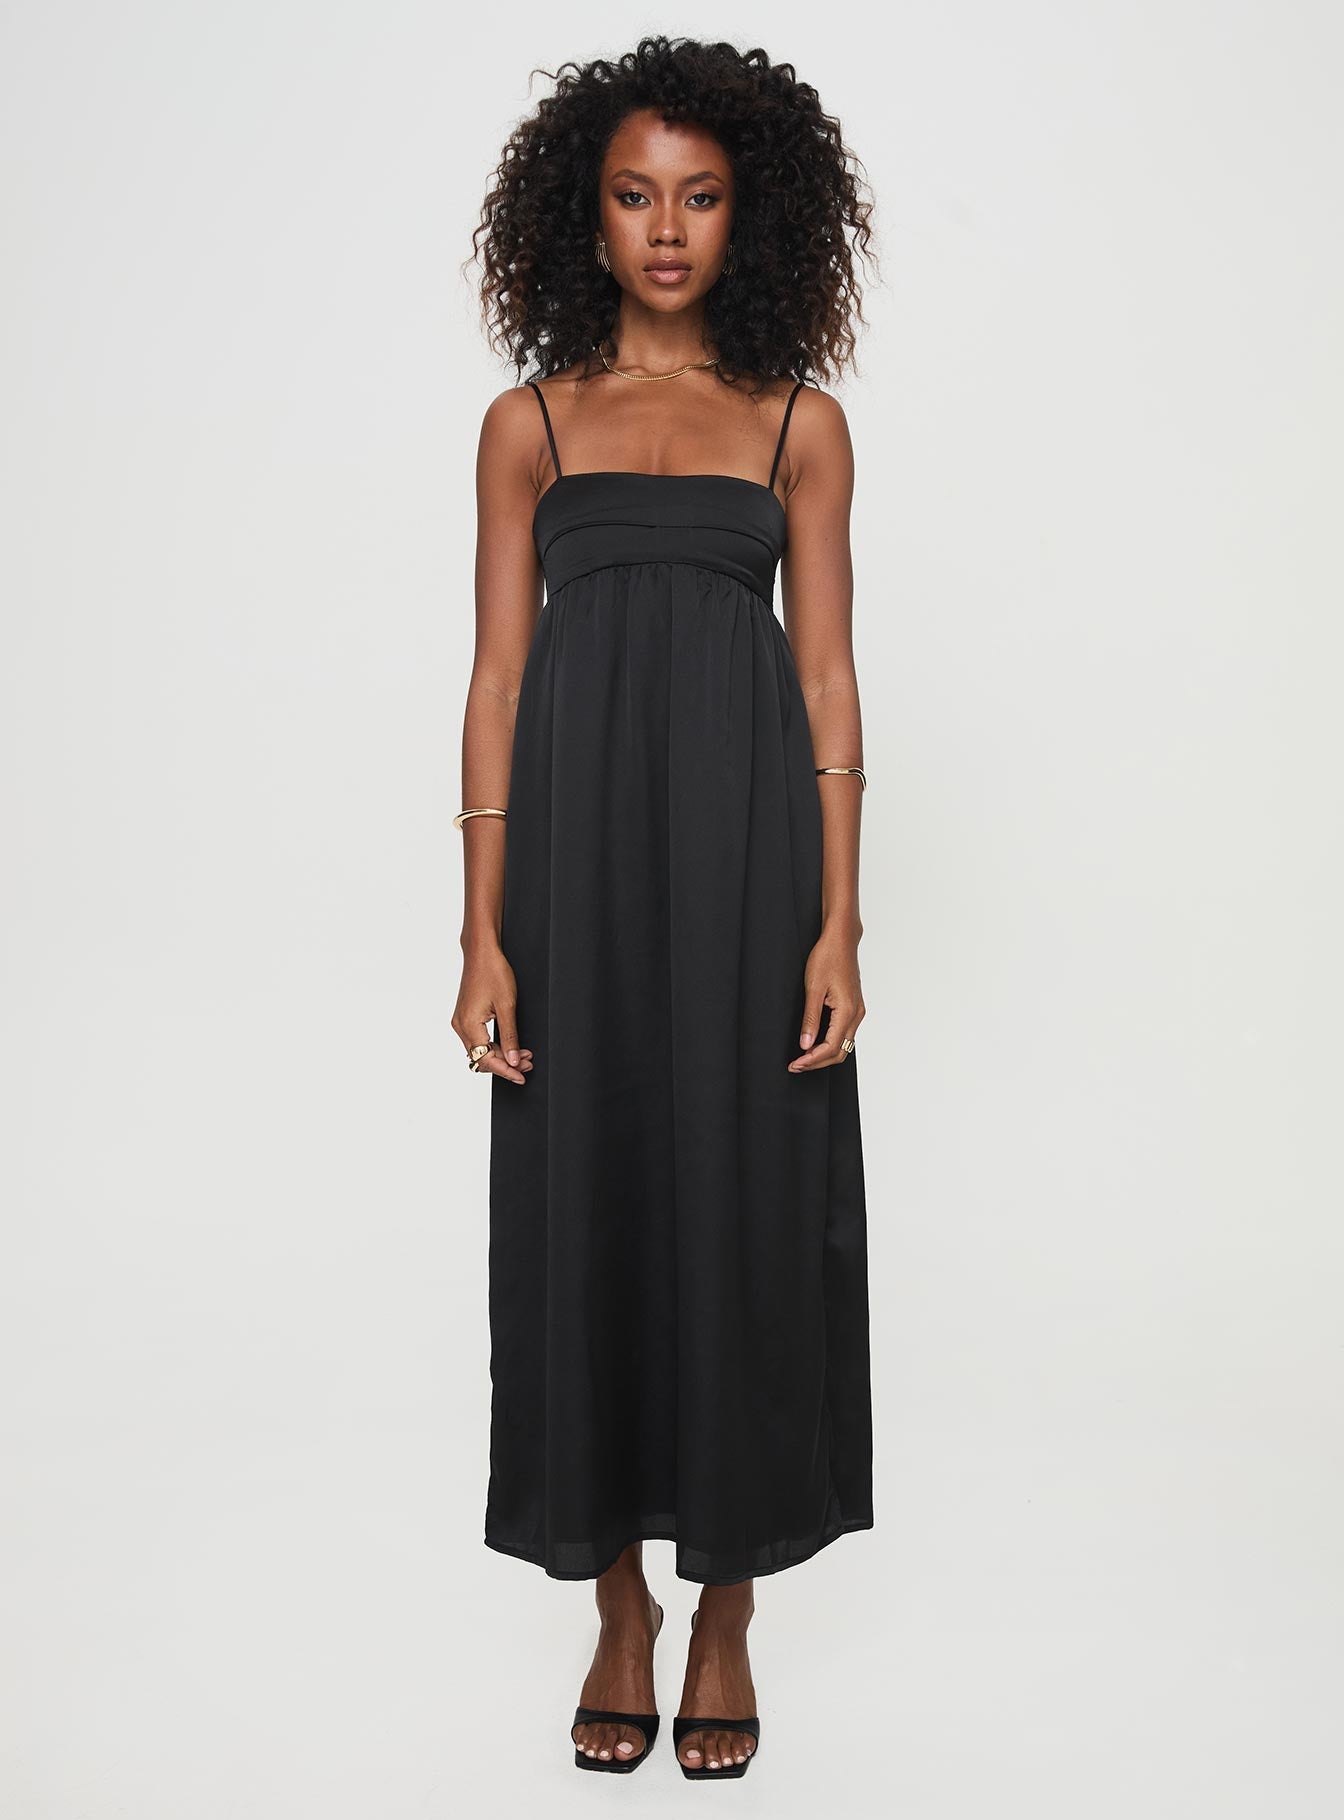 Shop Formal Dress - Ortega Maxi Dress Black third image